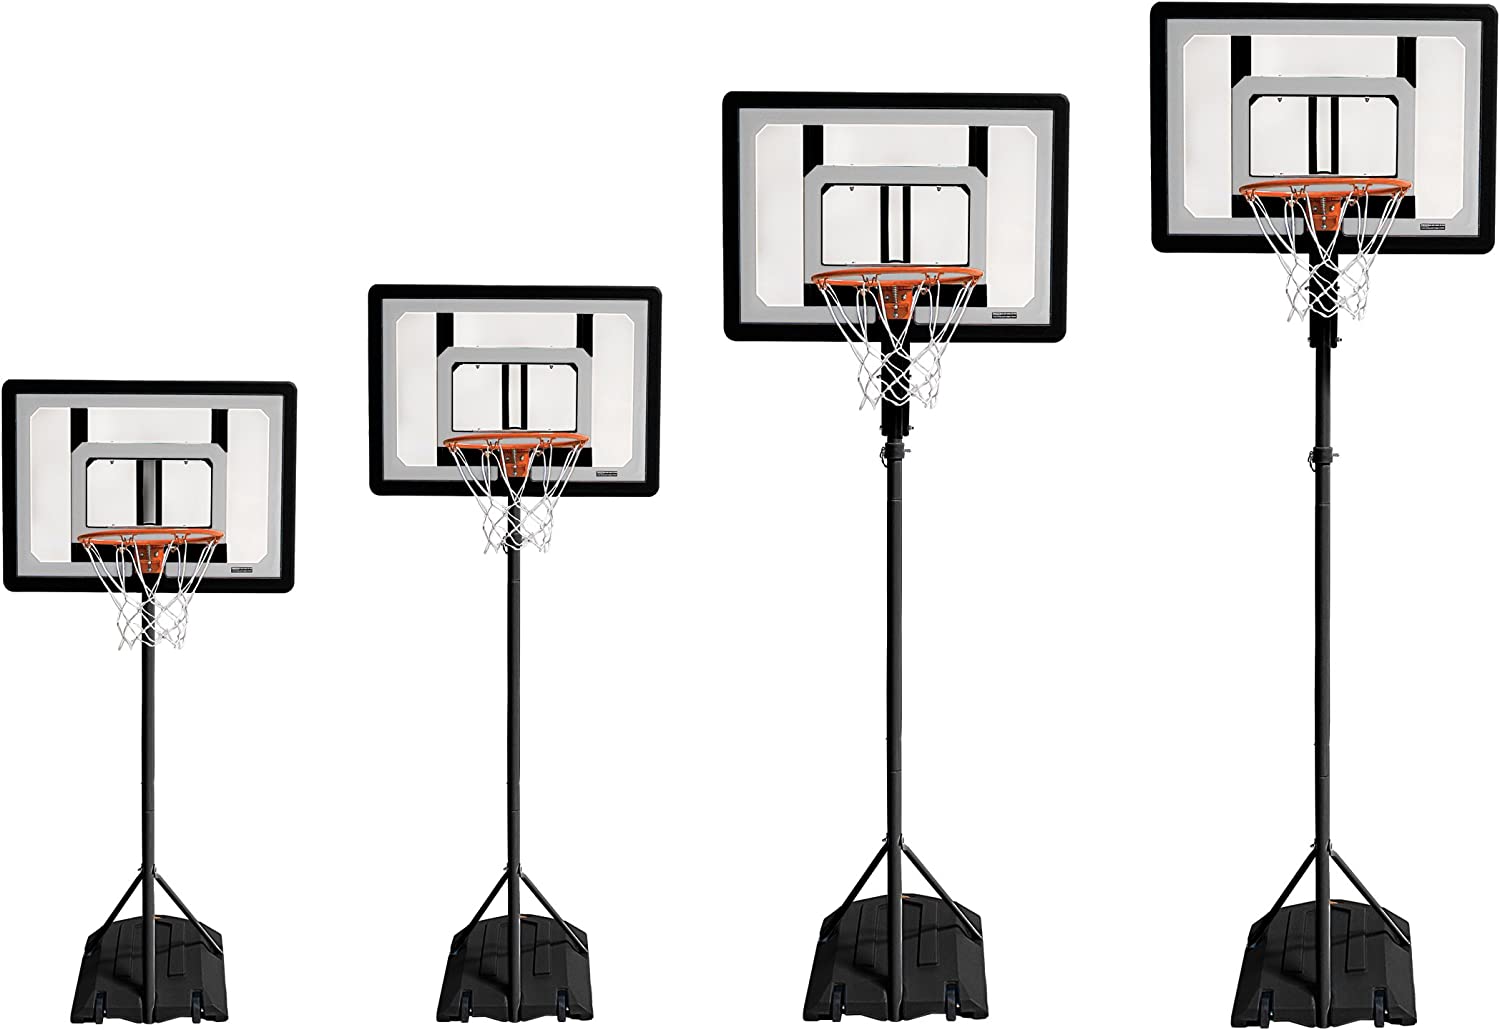 SKLZ Pro Mini Basketball Hoop System